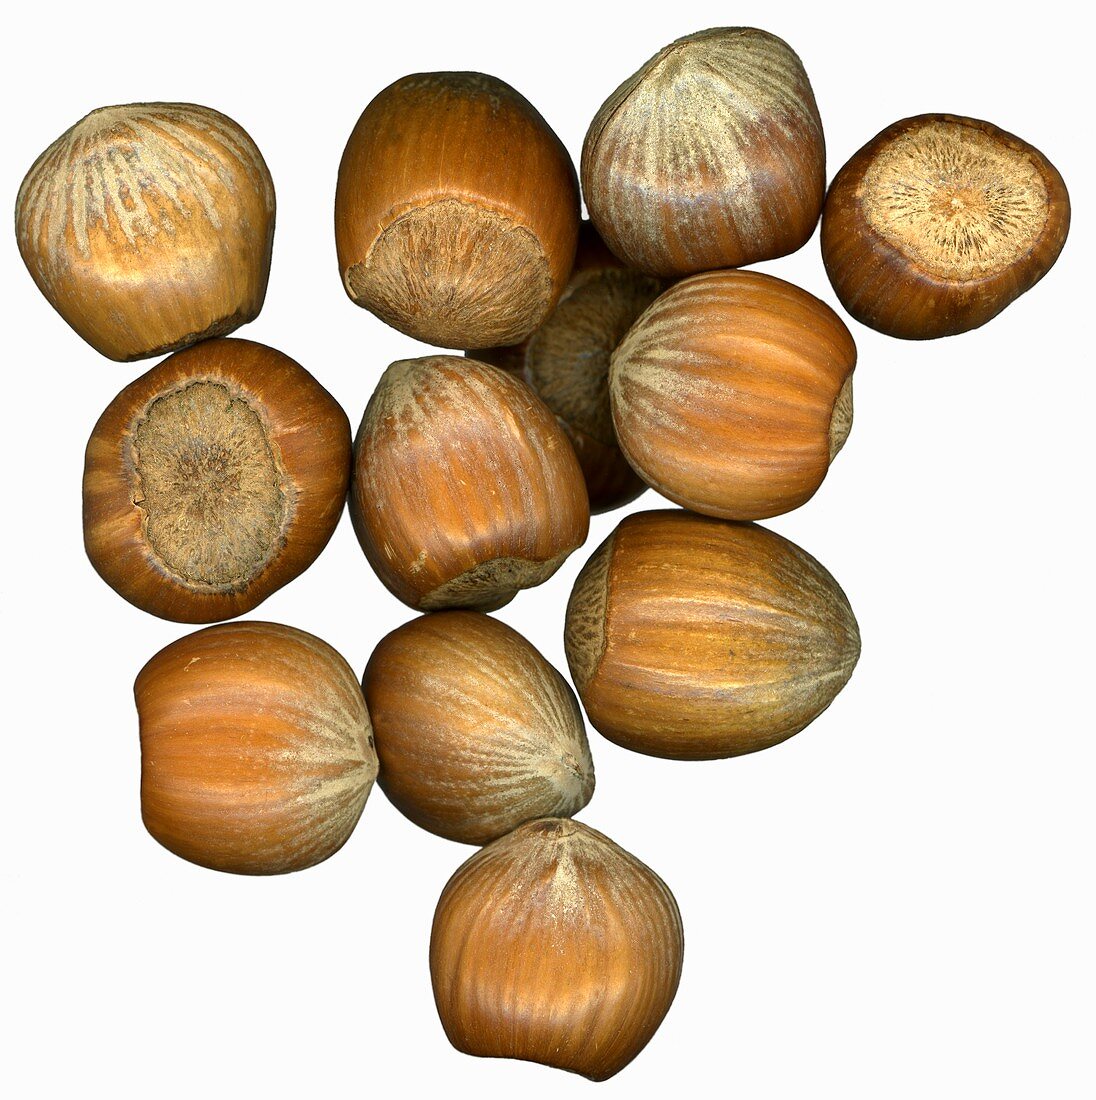 Several hazelnuts